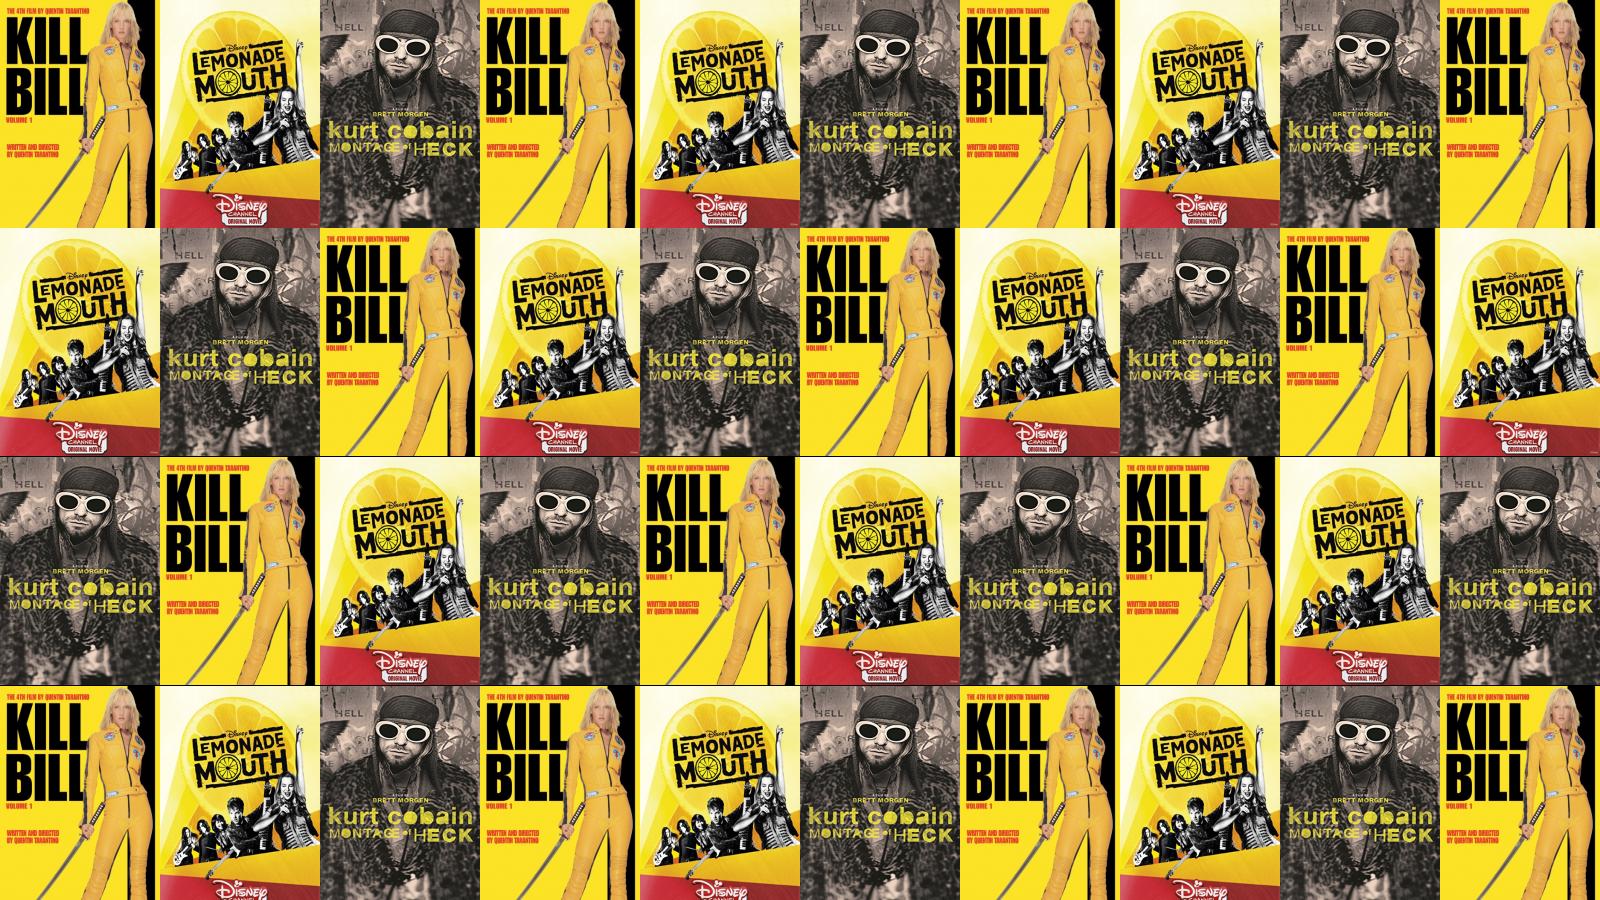 Kill Bill Lemonade Mouth Cobain Montage Heck Wallpaper Tiled